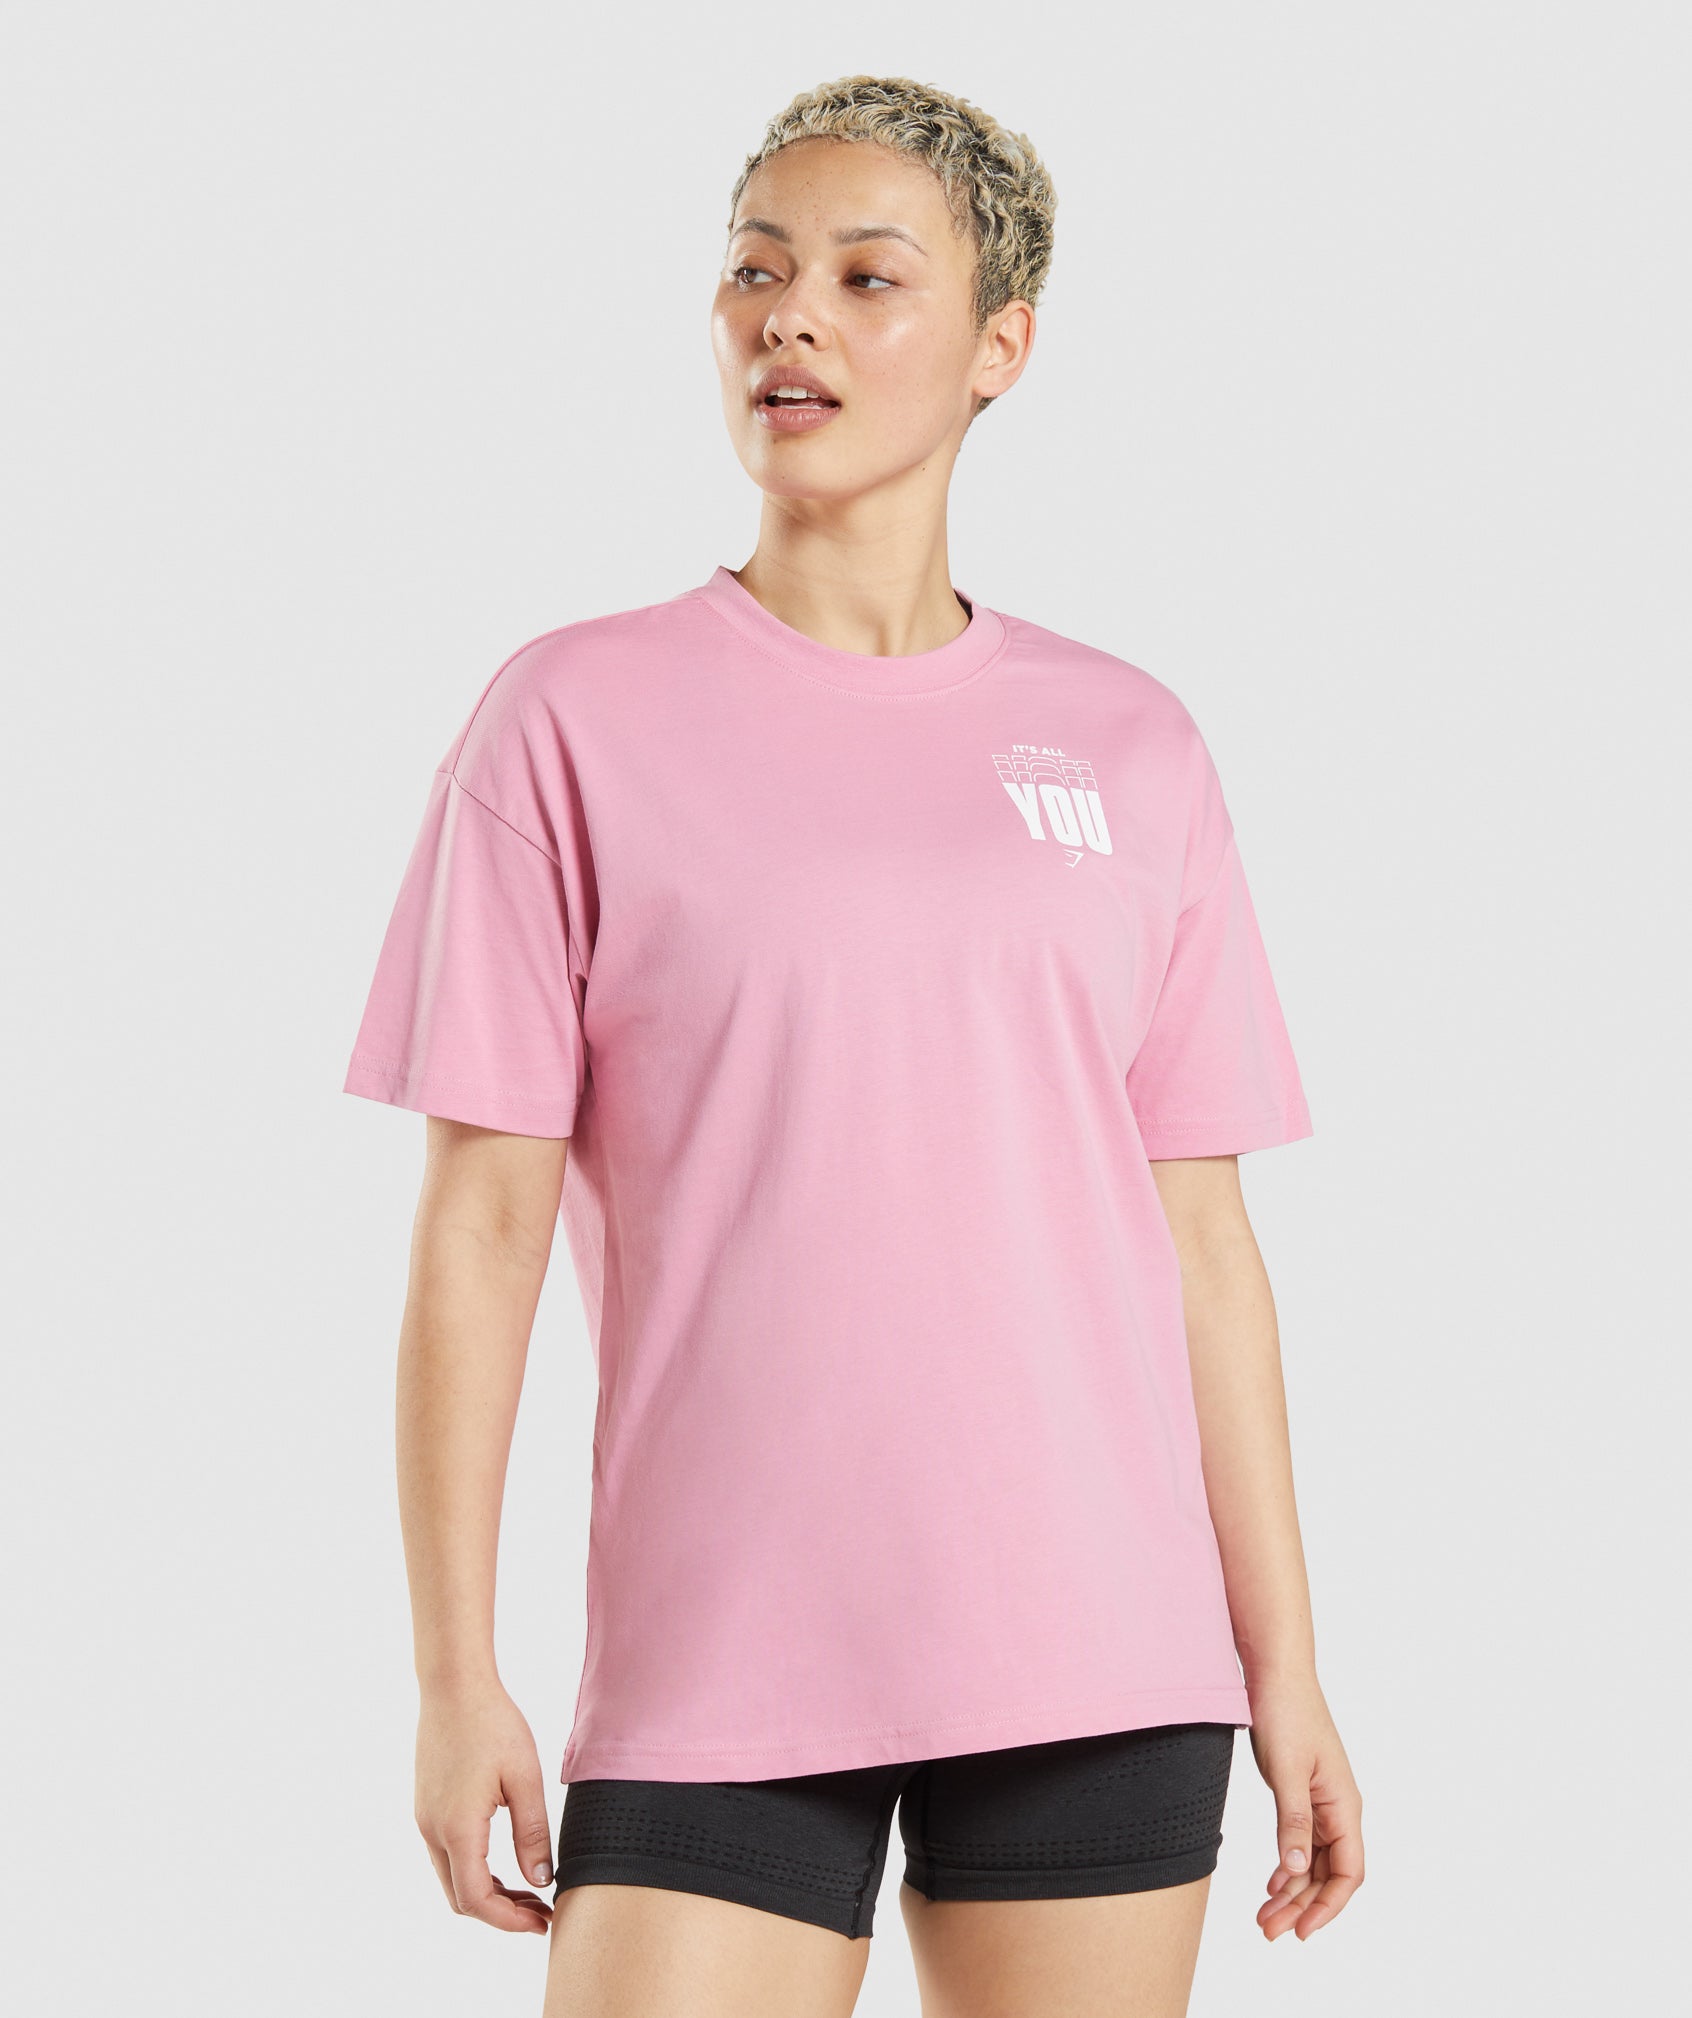 Gymshark Sorbet Pink Long Sleeve T-Shirt - Tracy Kiss